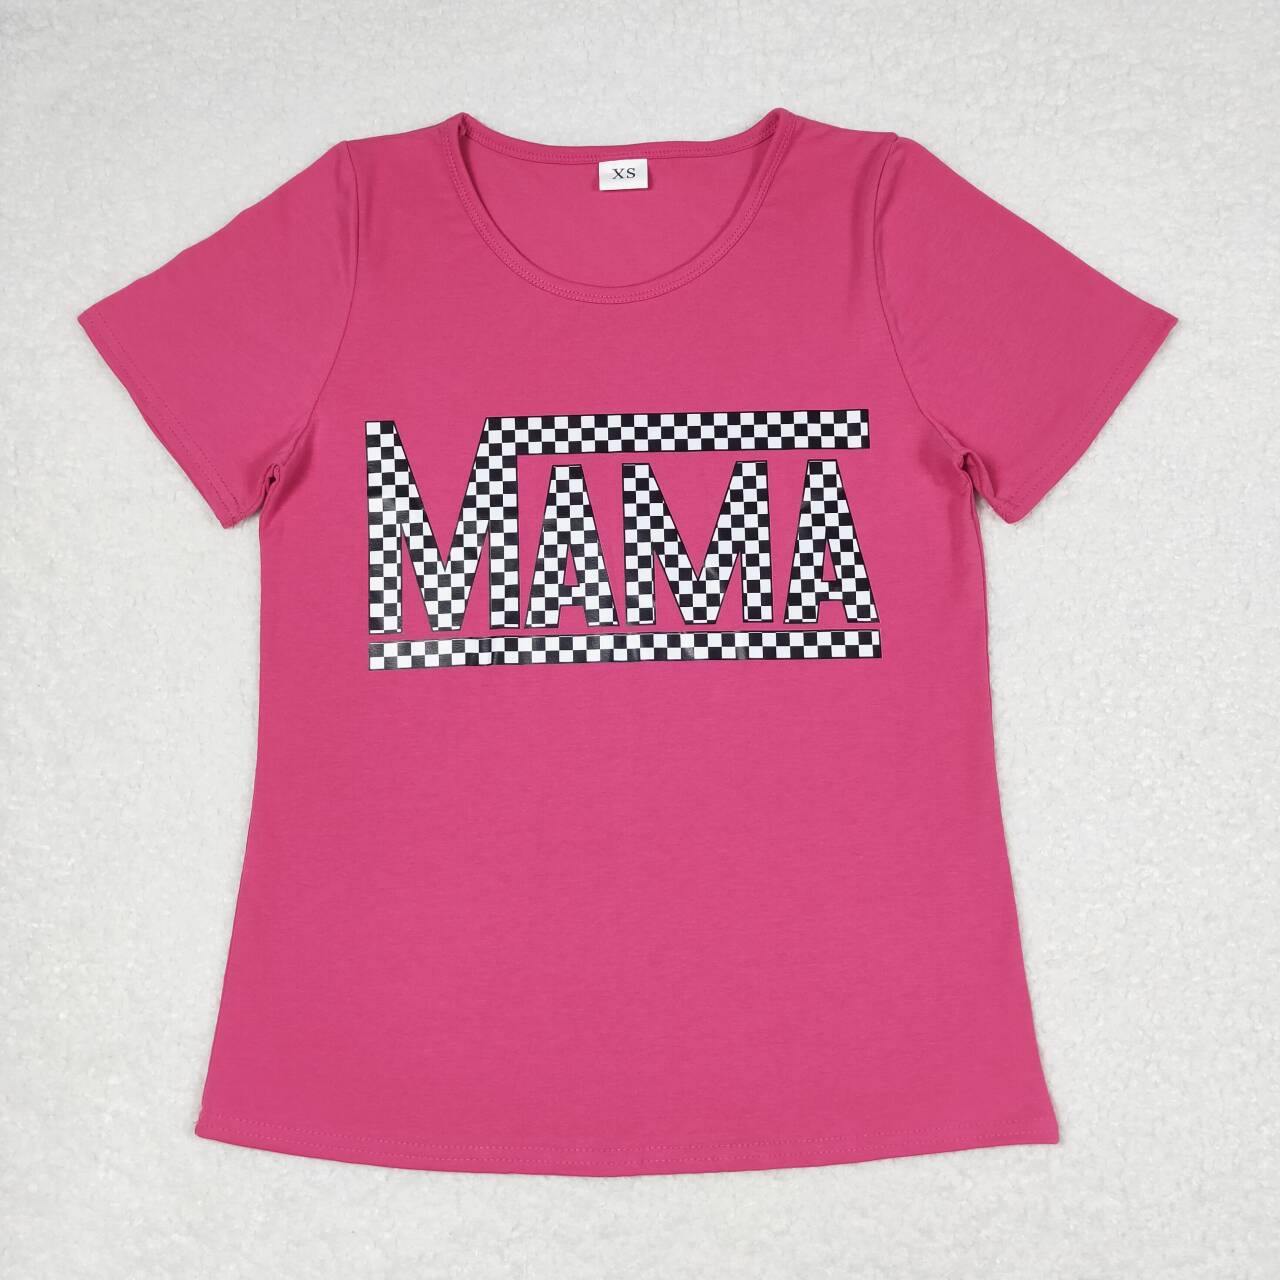 GT0574 Adult Hot Pink MAMA Vinyl Woman Summer Tee Shirts Top